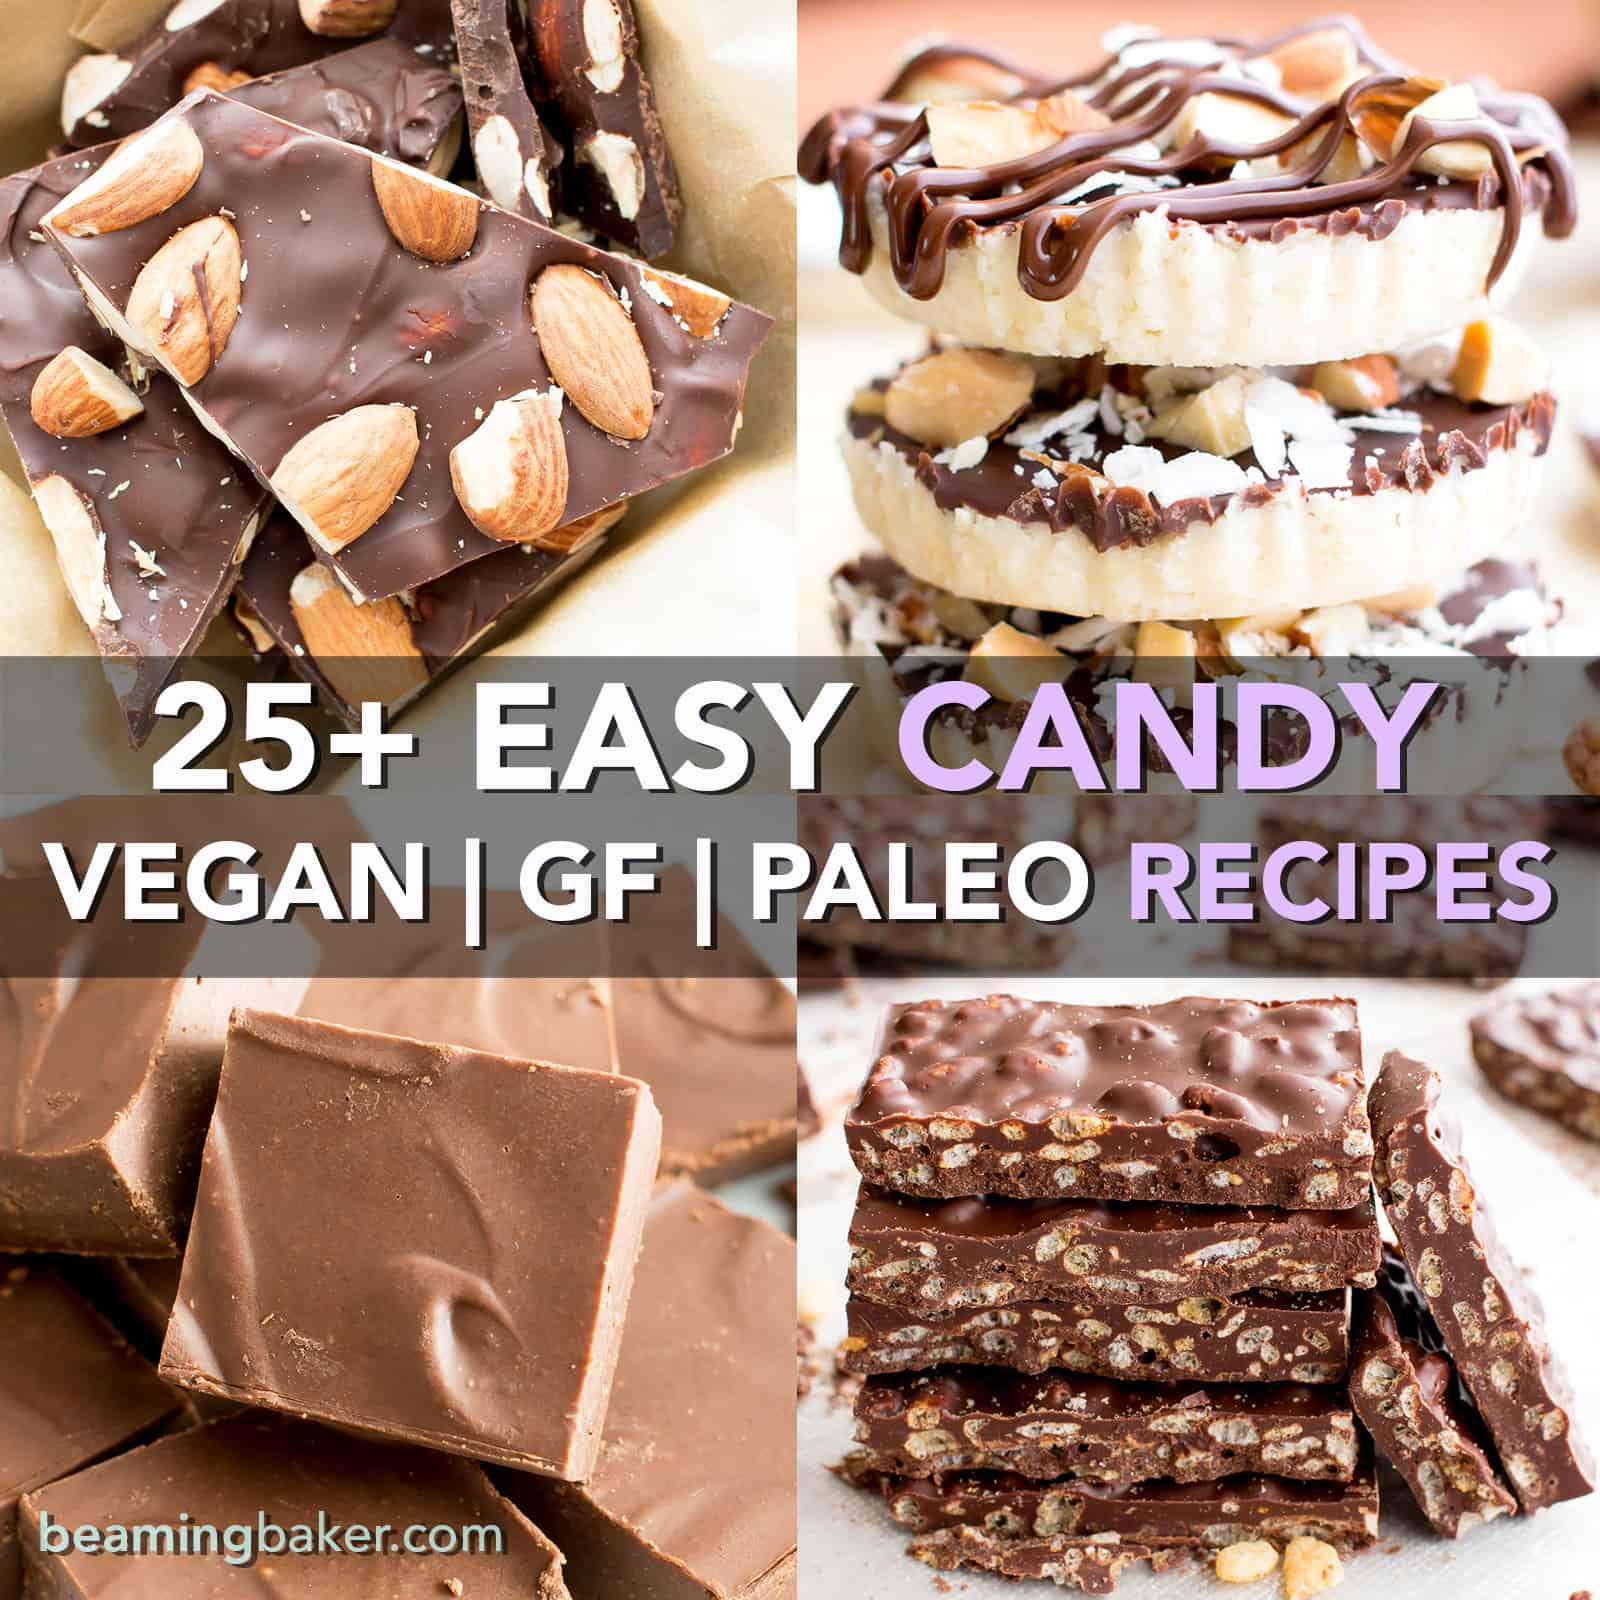 25+ Easy Gluten-Free Vegan Candy Recipes (GF, V, Paleo, Dairy-Free)